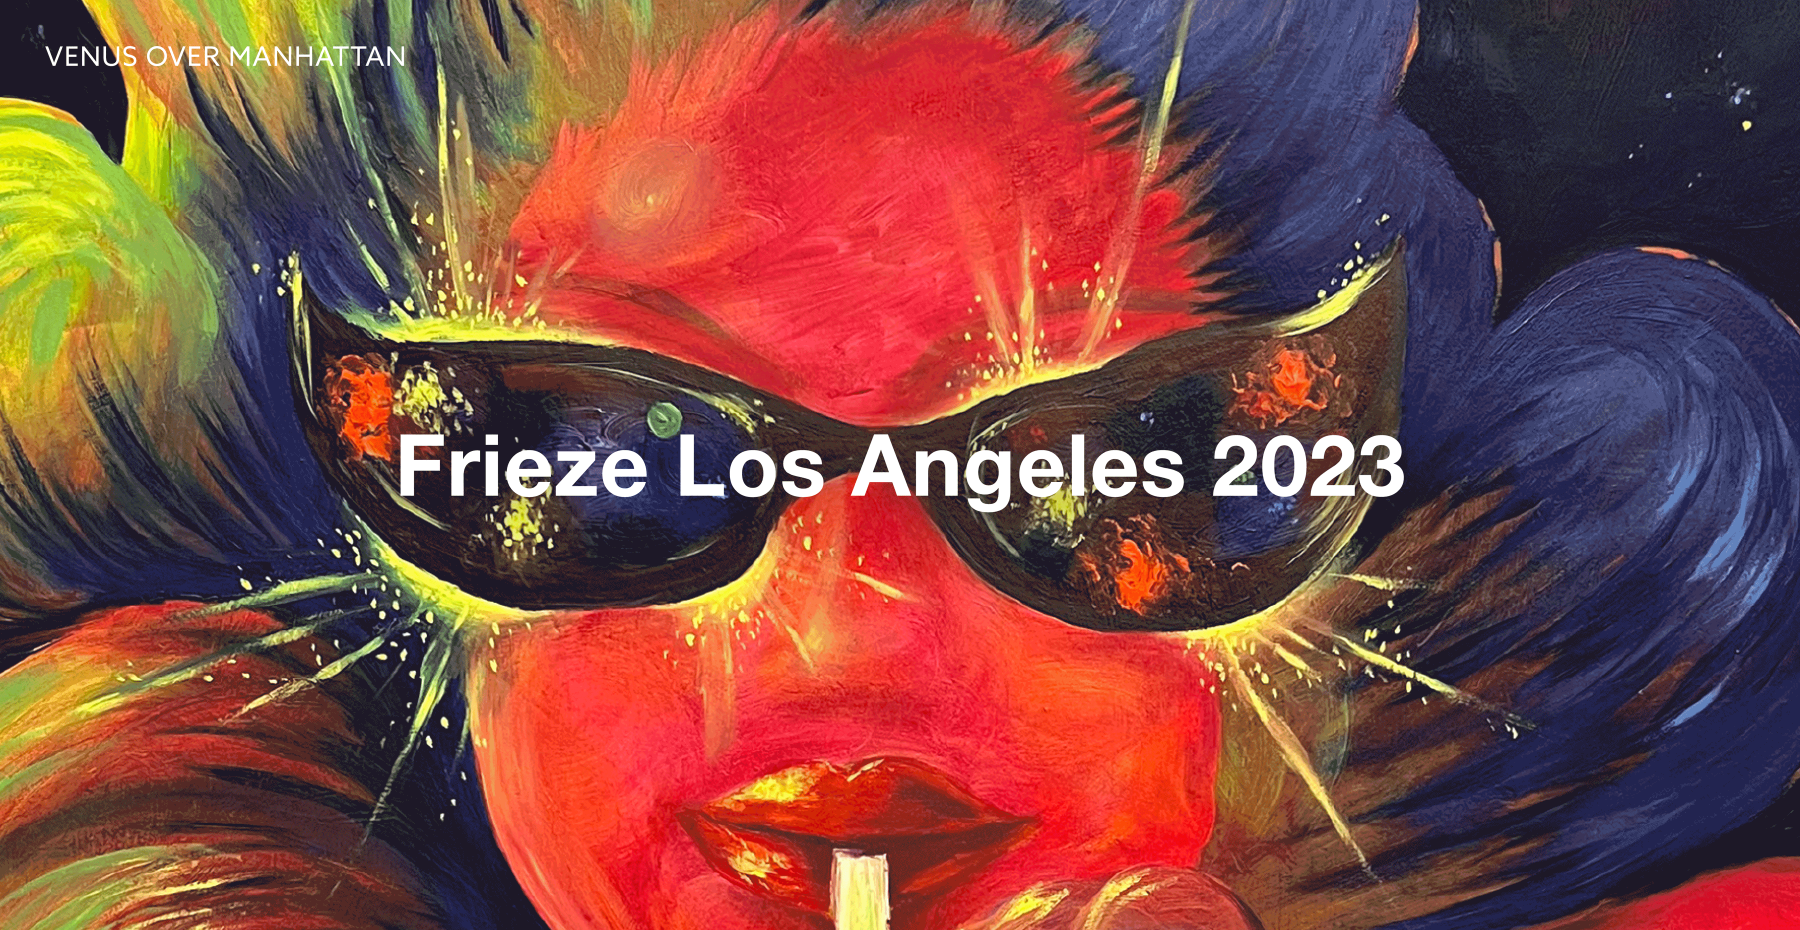 Frieze Los Angeles 2023 - Santa Monica Airport | Barker Hangar - Viewing Room - Venus Over Manhattan Viewing Room